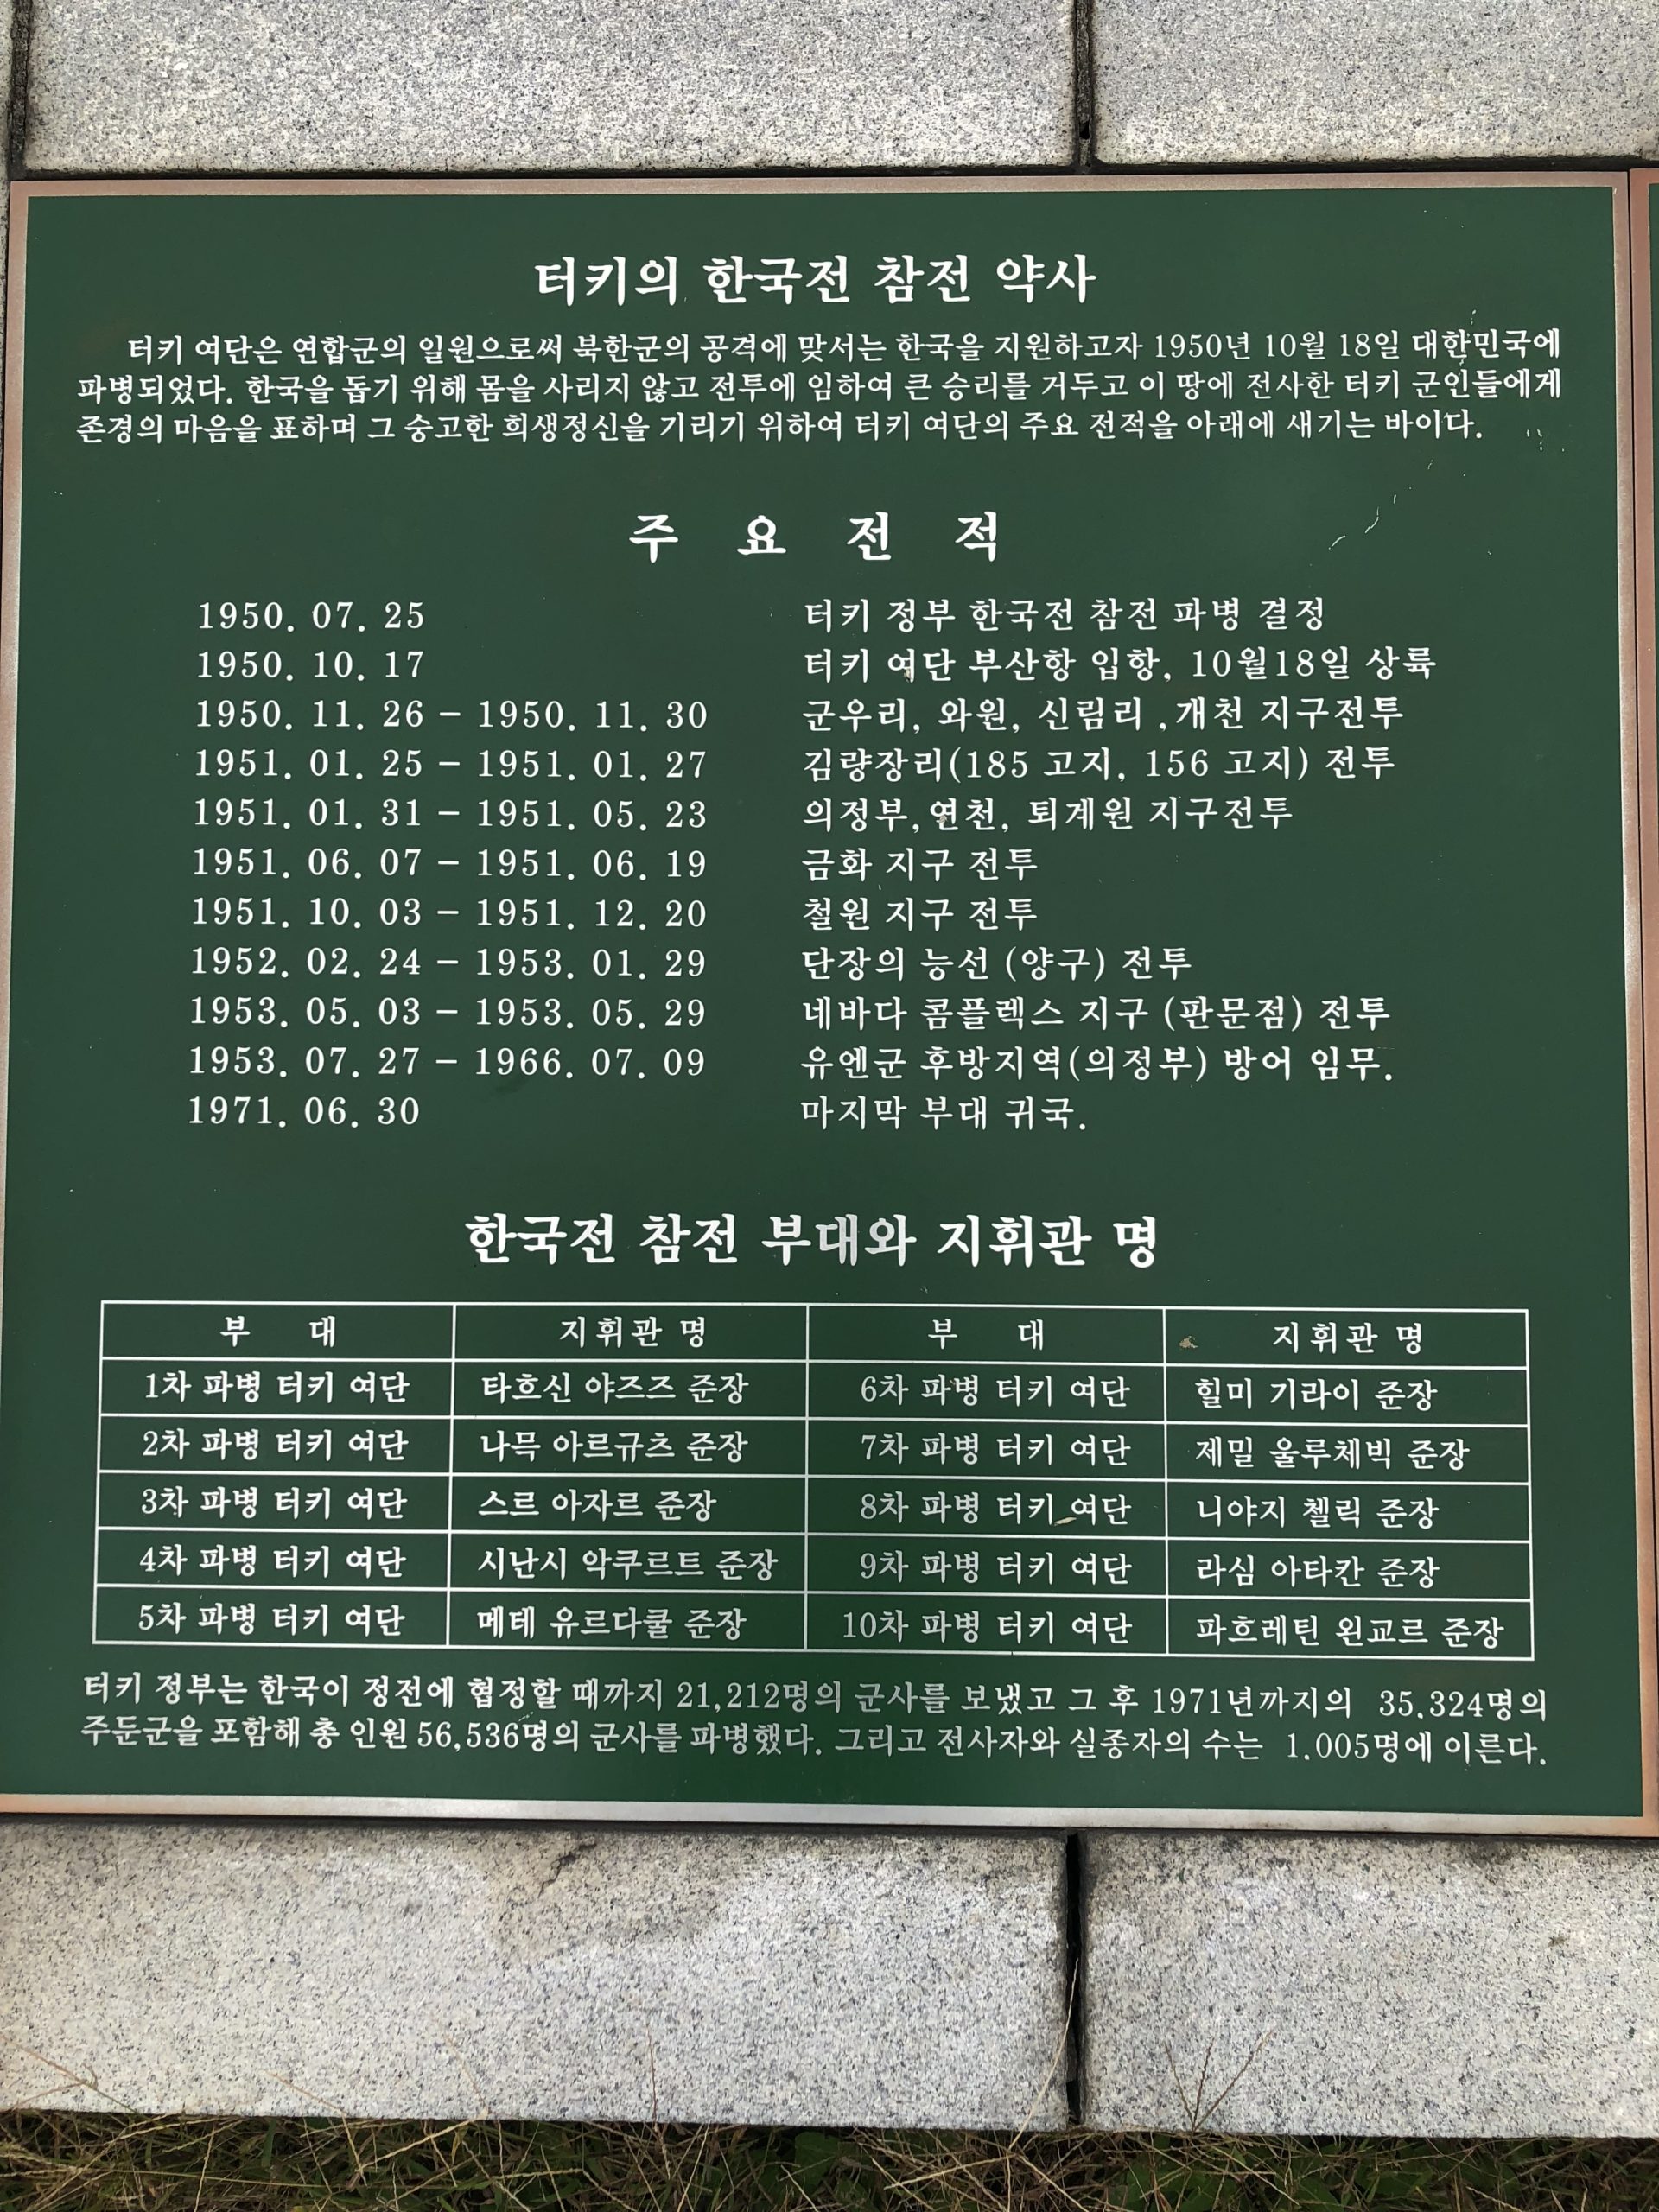 Korean War Memorials - 산16-1 Dongbaek-dong